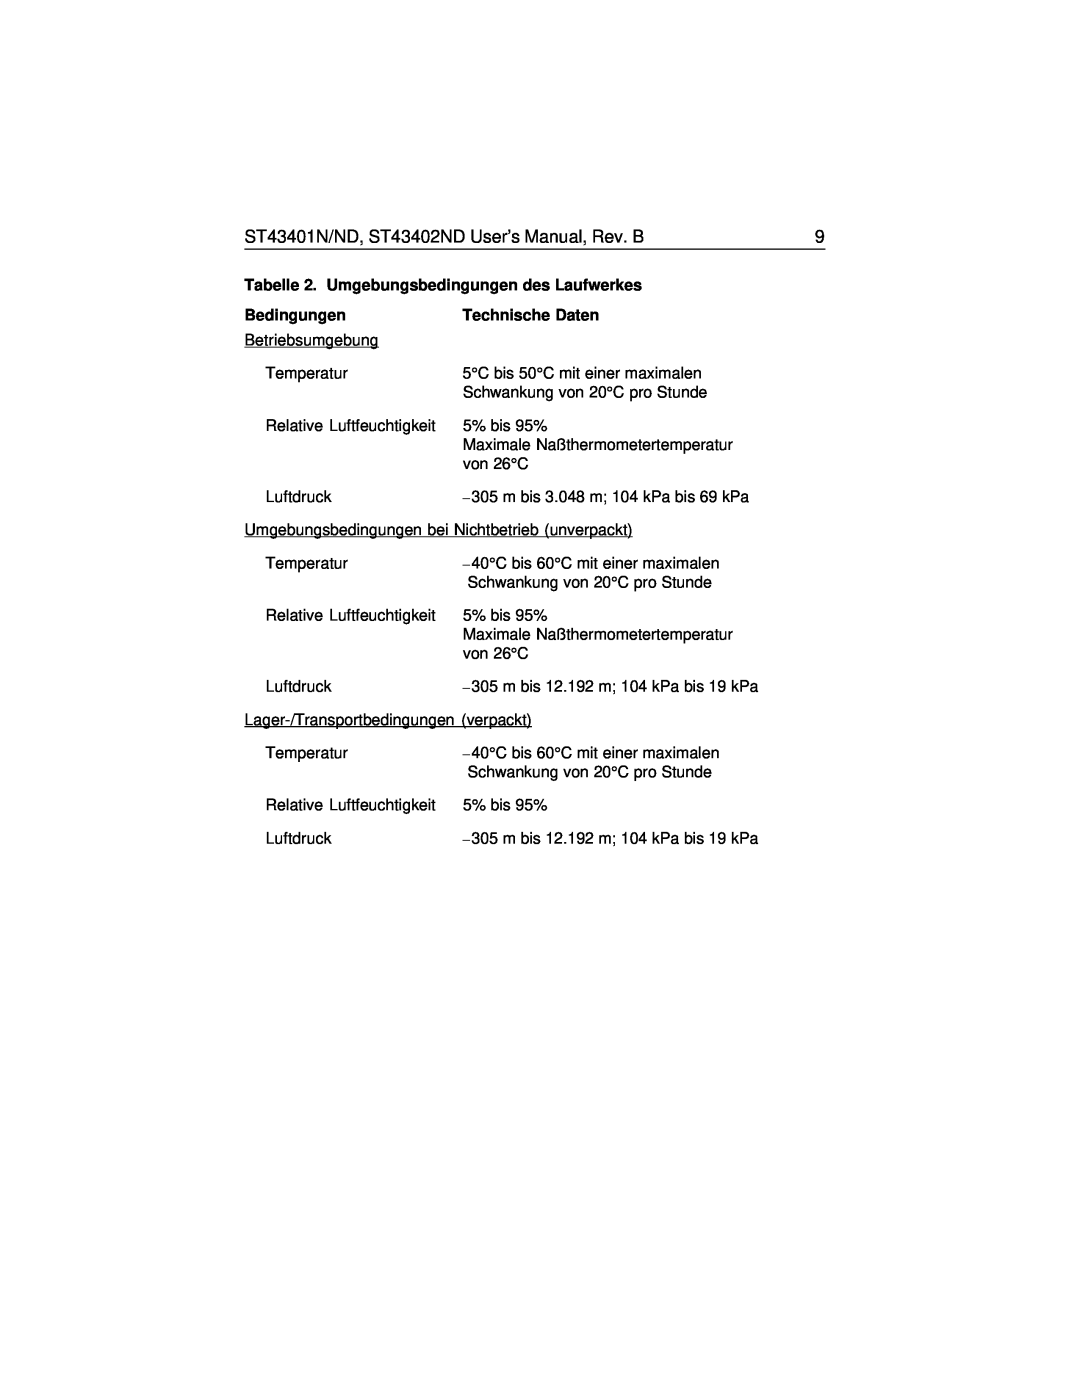 Seagate ST43401N/ND, ST43402ND User’s Manual, Rev. B, Tabelle 2. Umgebungsbedingungen des Laufwerkes, Bedingungen 